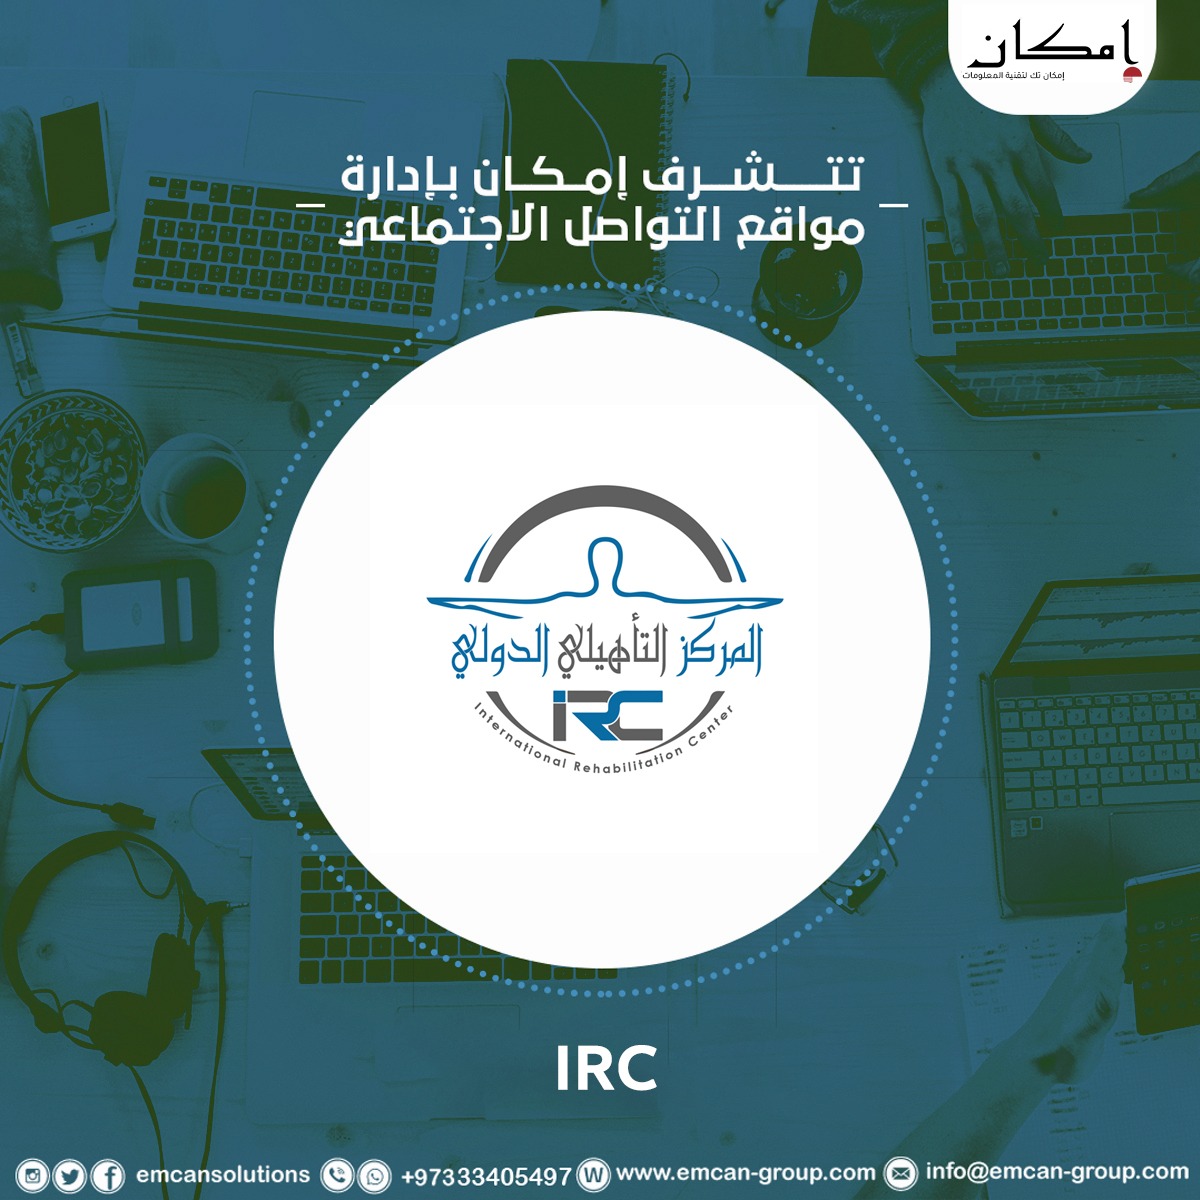 Social media management for the International Rehabilitation Center IRC